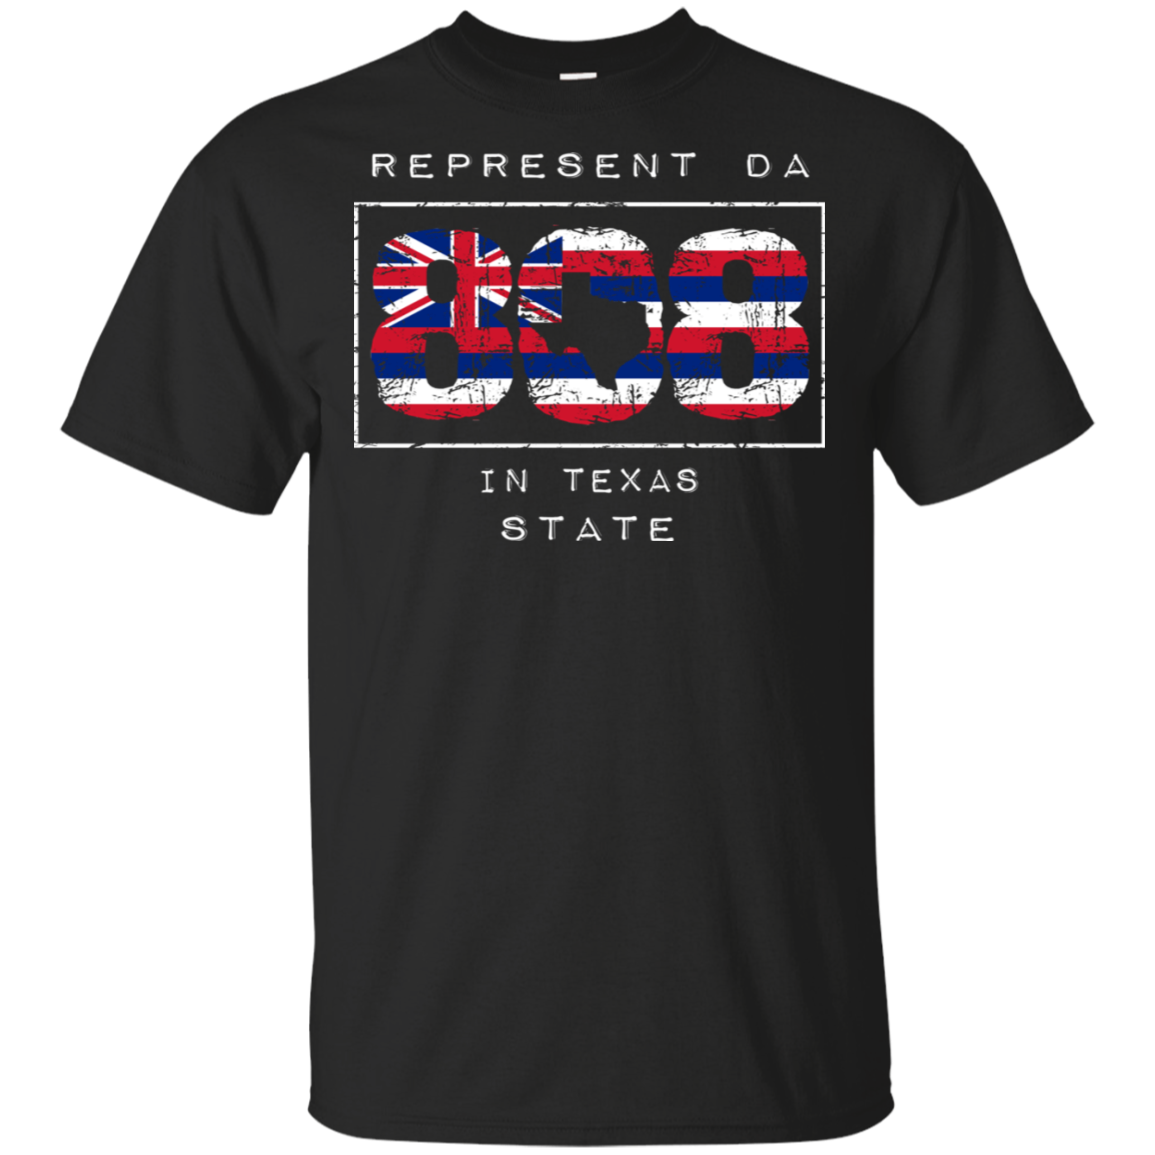 Rep Da 808 In Texas State Ultra Cotton T-Shirt, T-Shirts, Hawaii Nei All Day